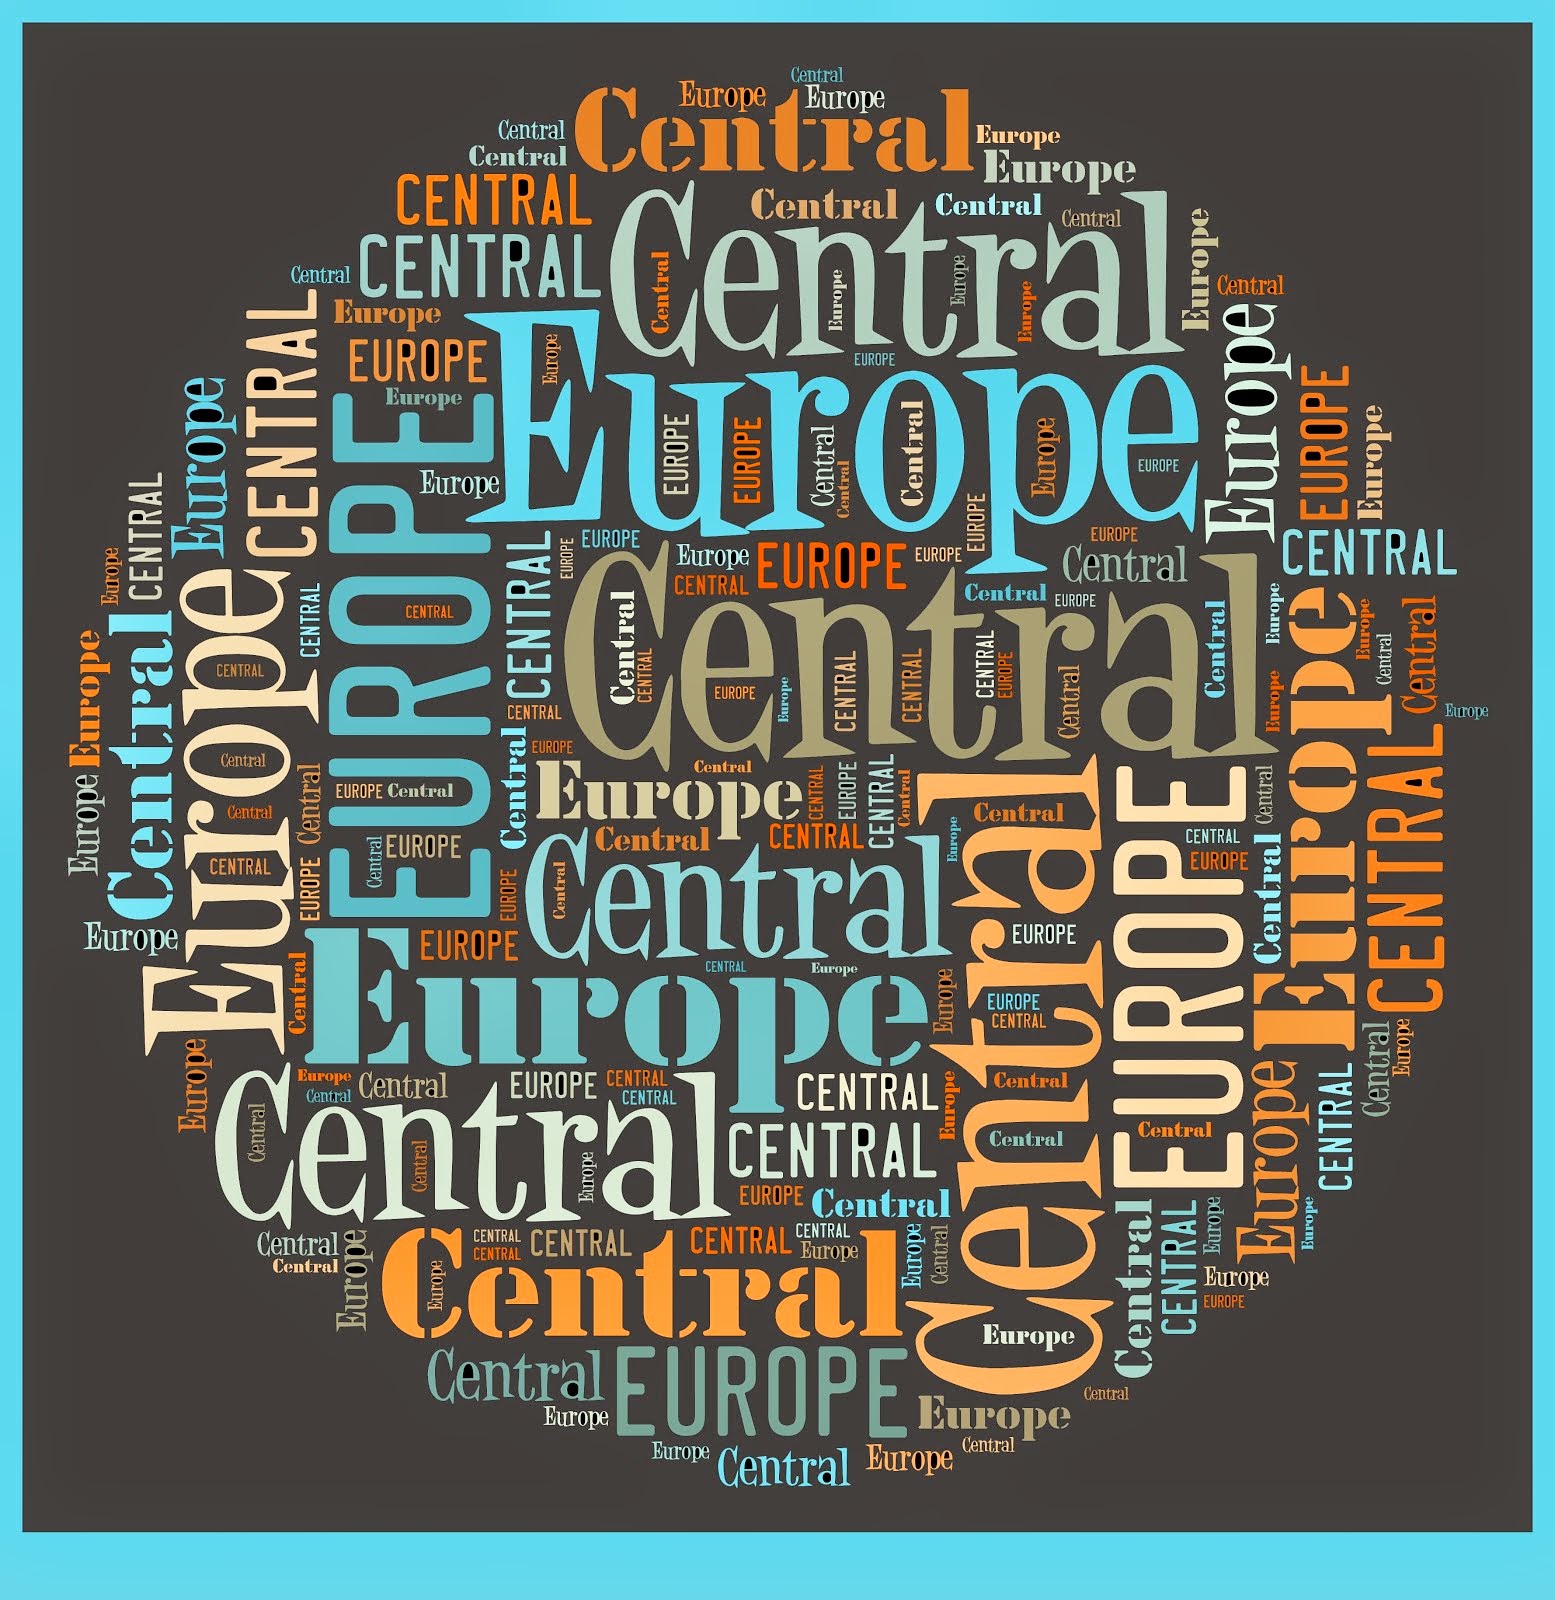 CentralEuropeNow